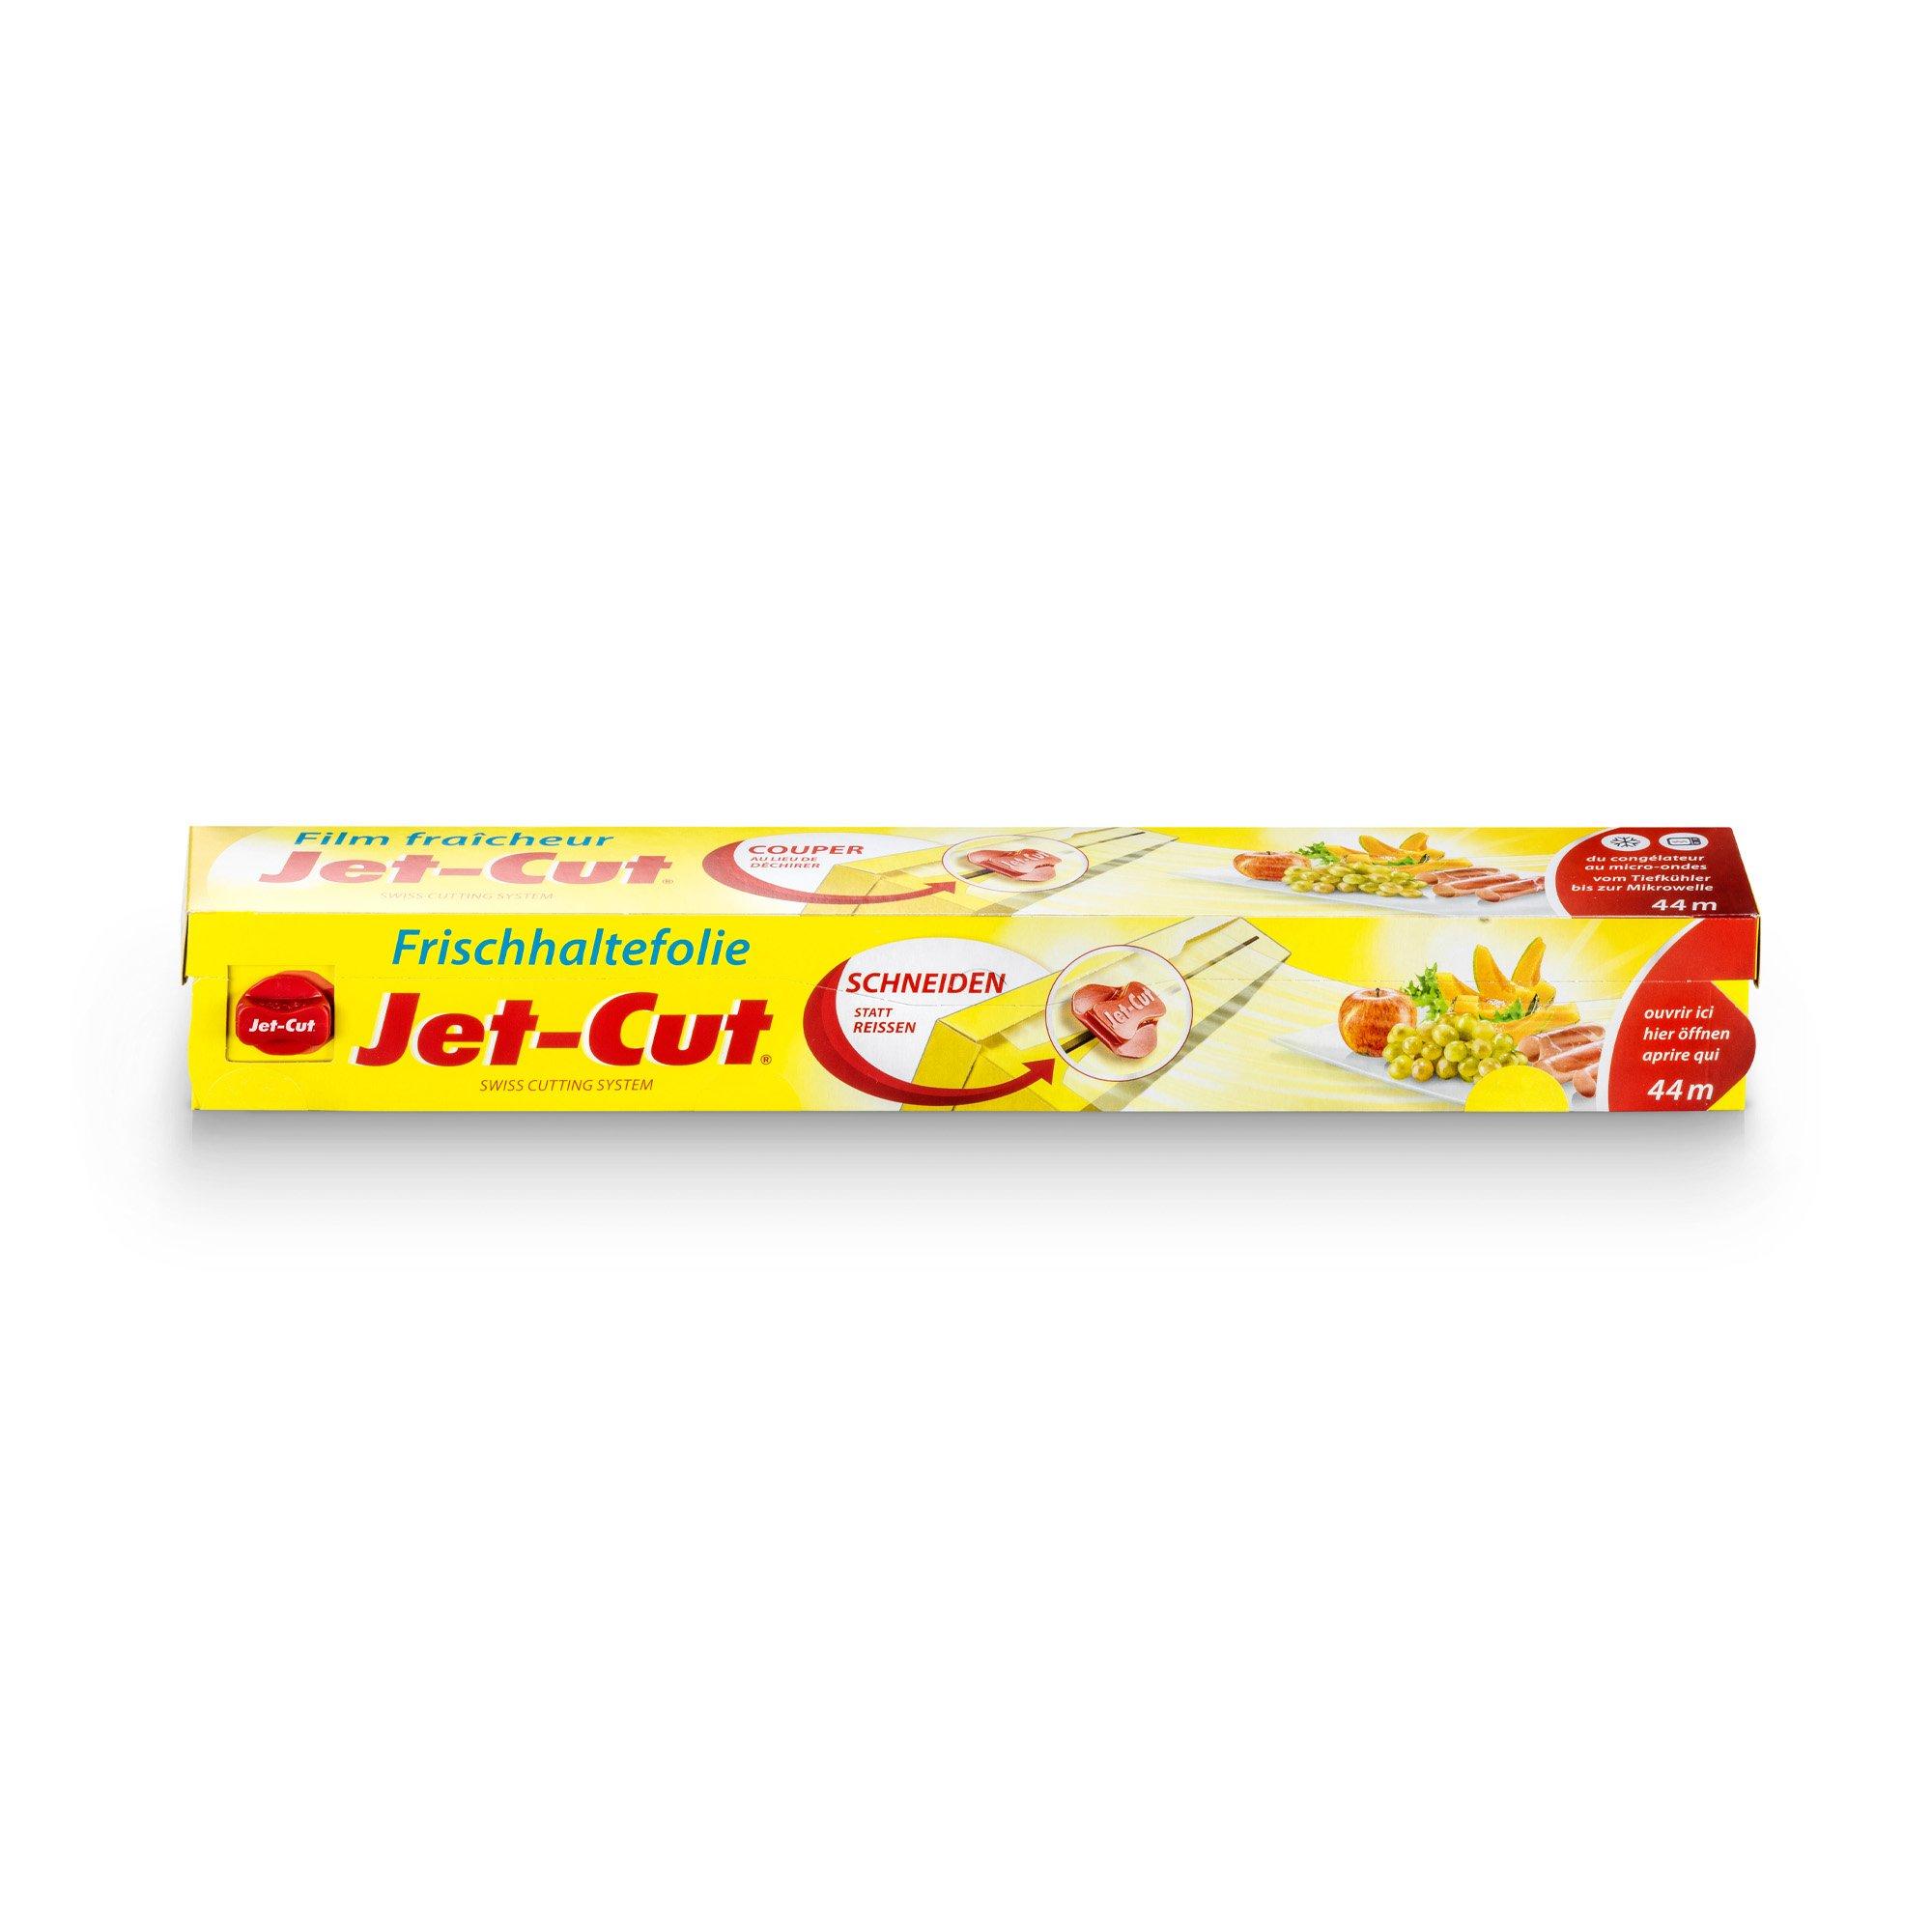 Image of JET-CUT Frischhaltefolie - 30cm x 40m